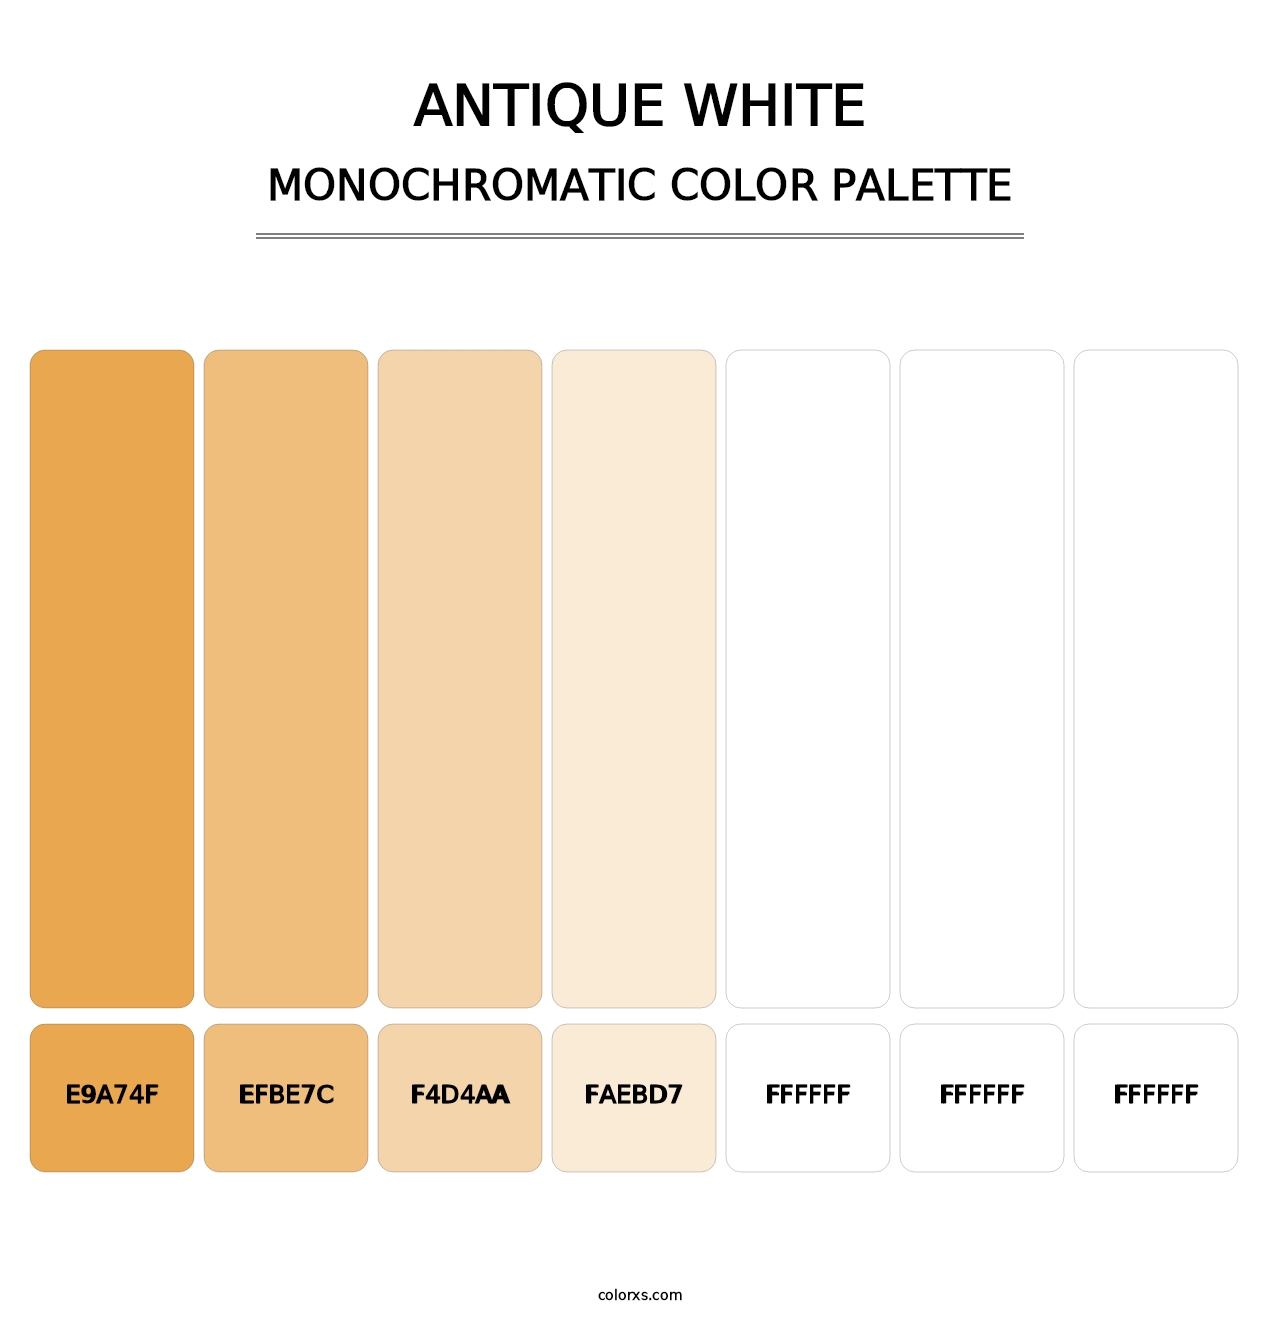 Antique White - Monochromatic Color Palette